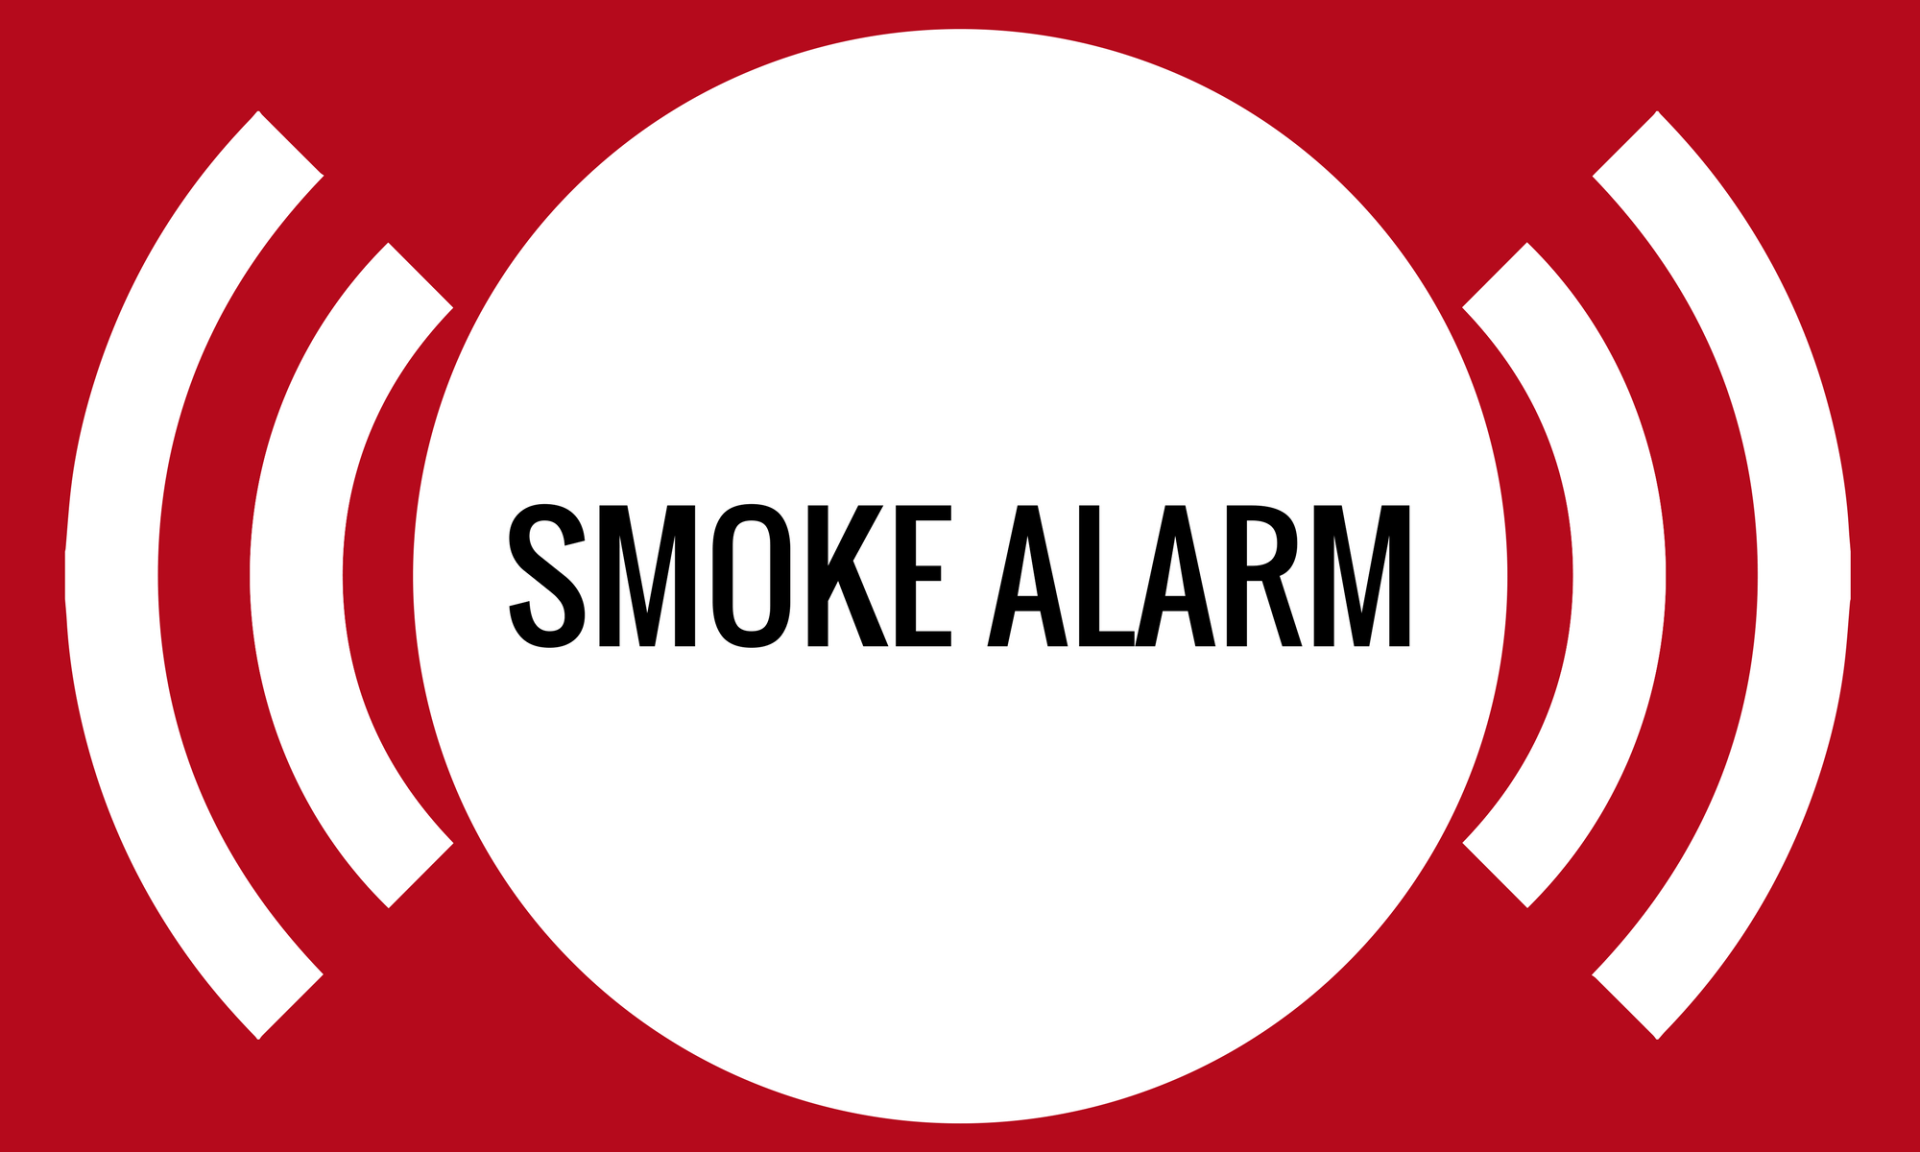 Alarm going off